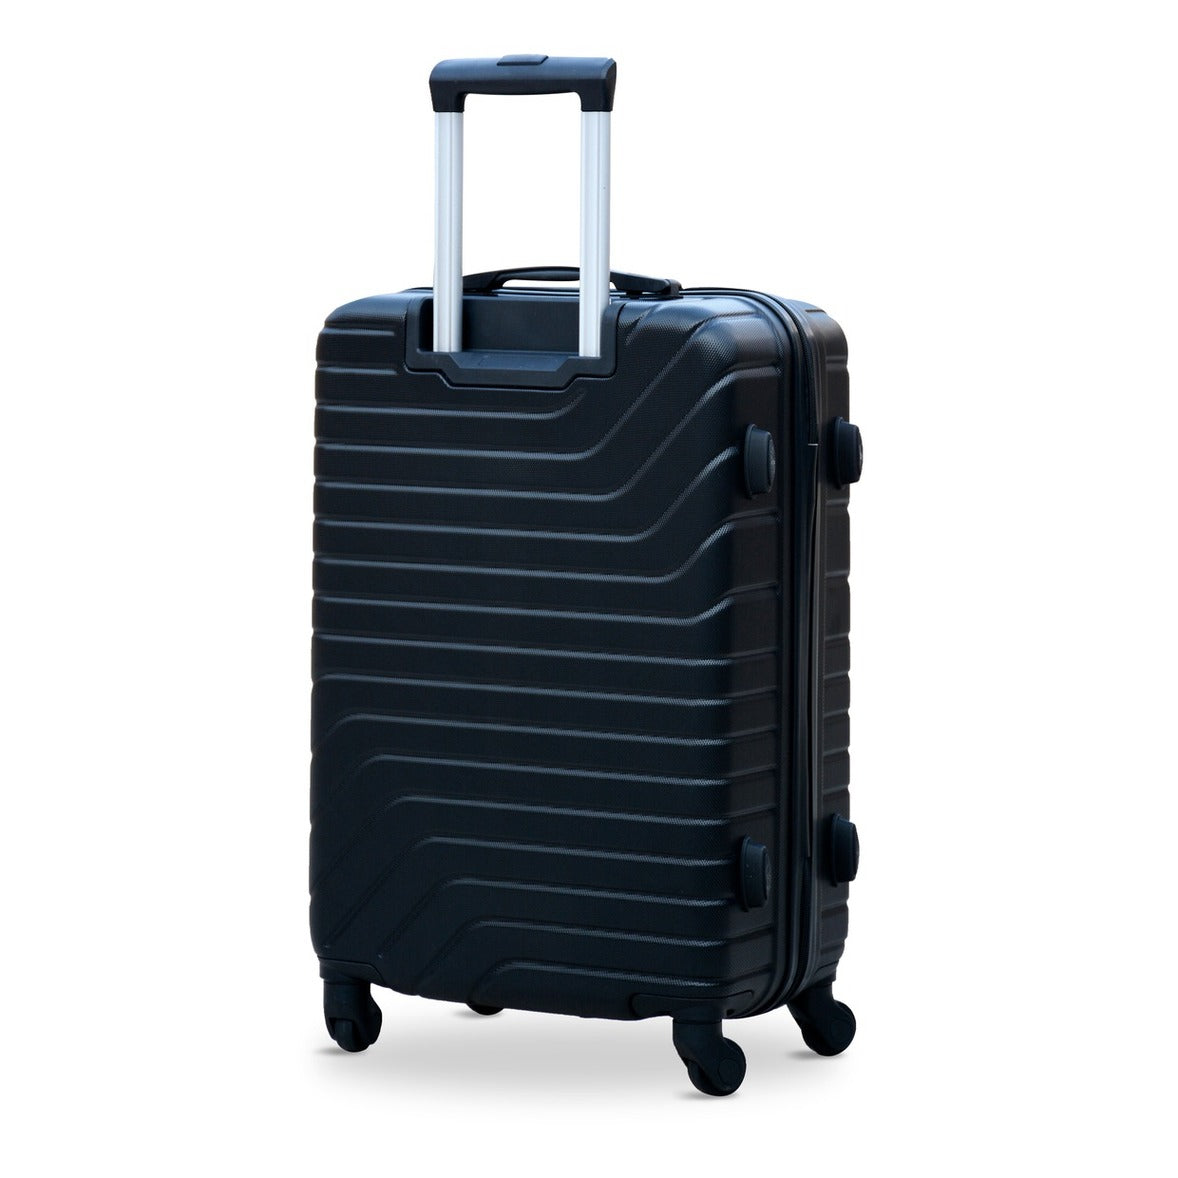 28" Black ColourSJ ABS Luggage Lightweight Hard Case Trolley Bag Zaappy.com